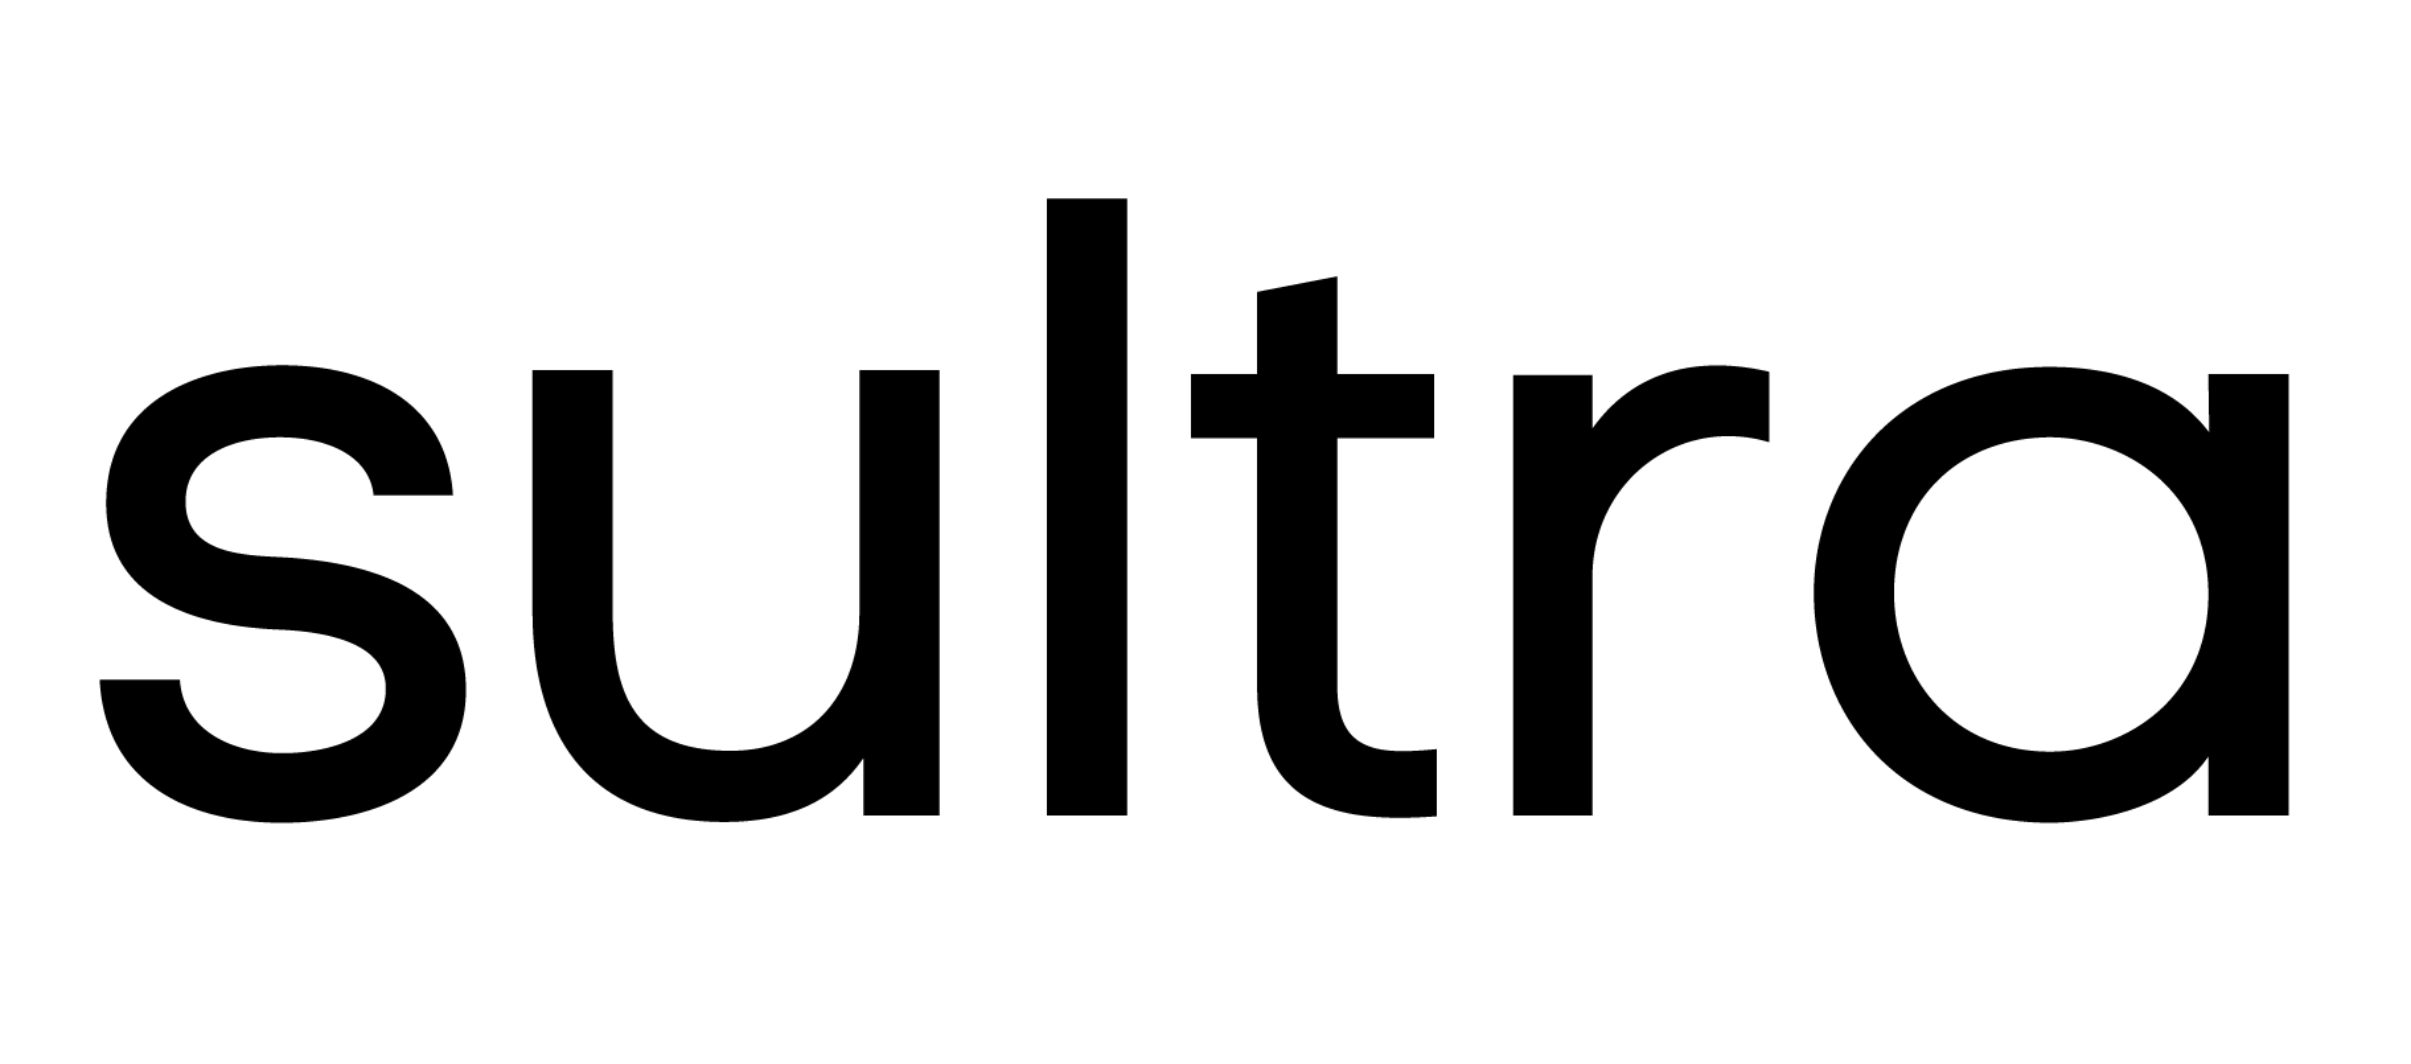 Sultra Logo